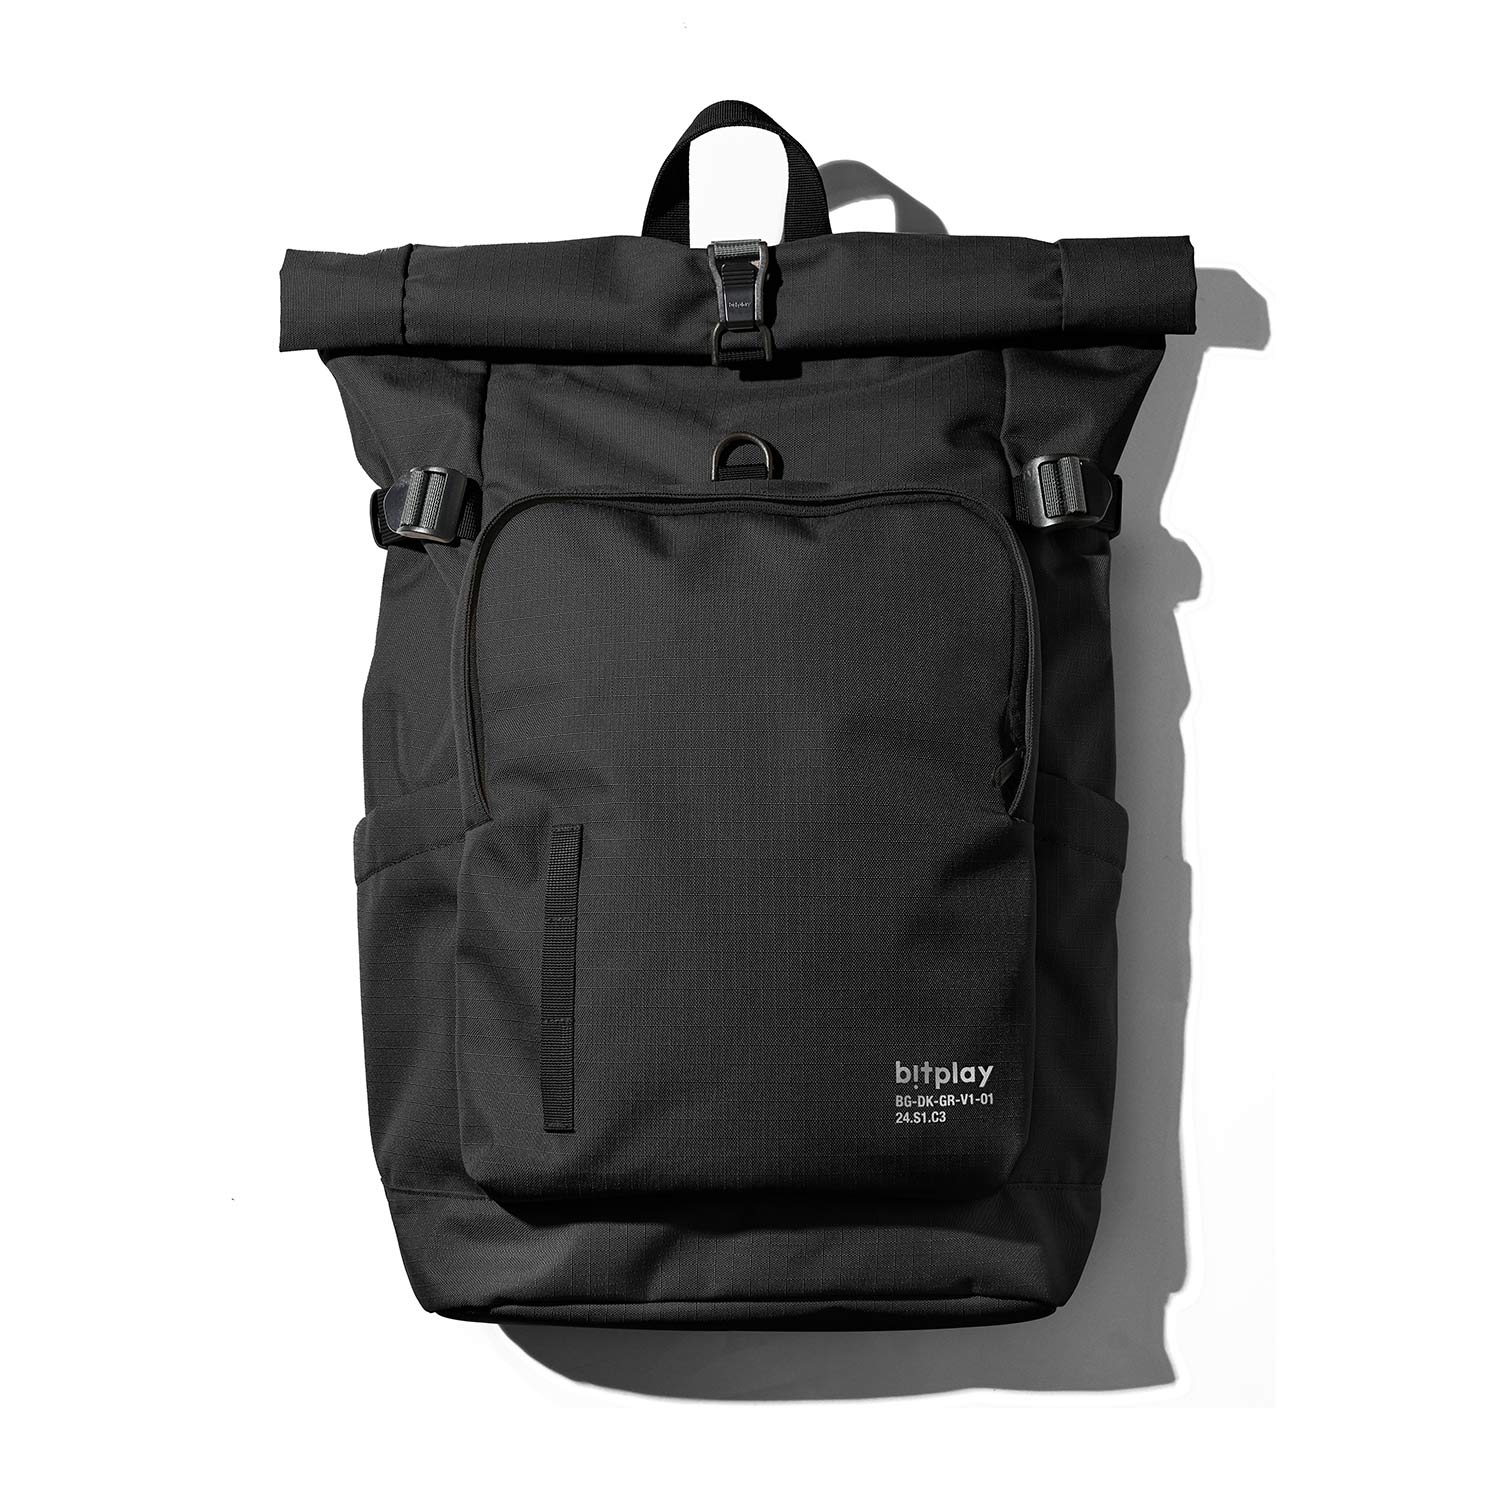 Bitplay Urban Daypack 24L Light Travel Laptop Bag